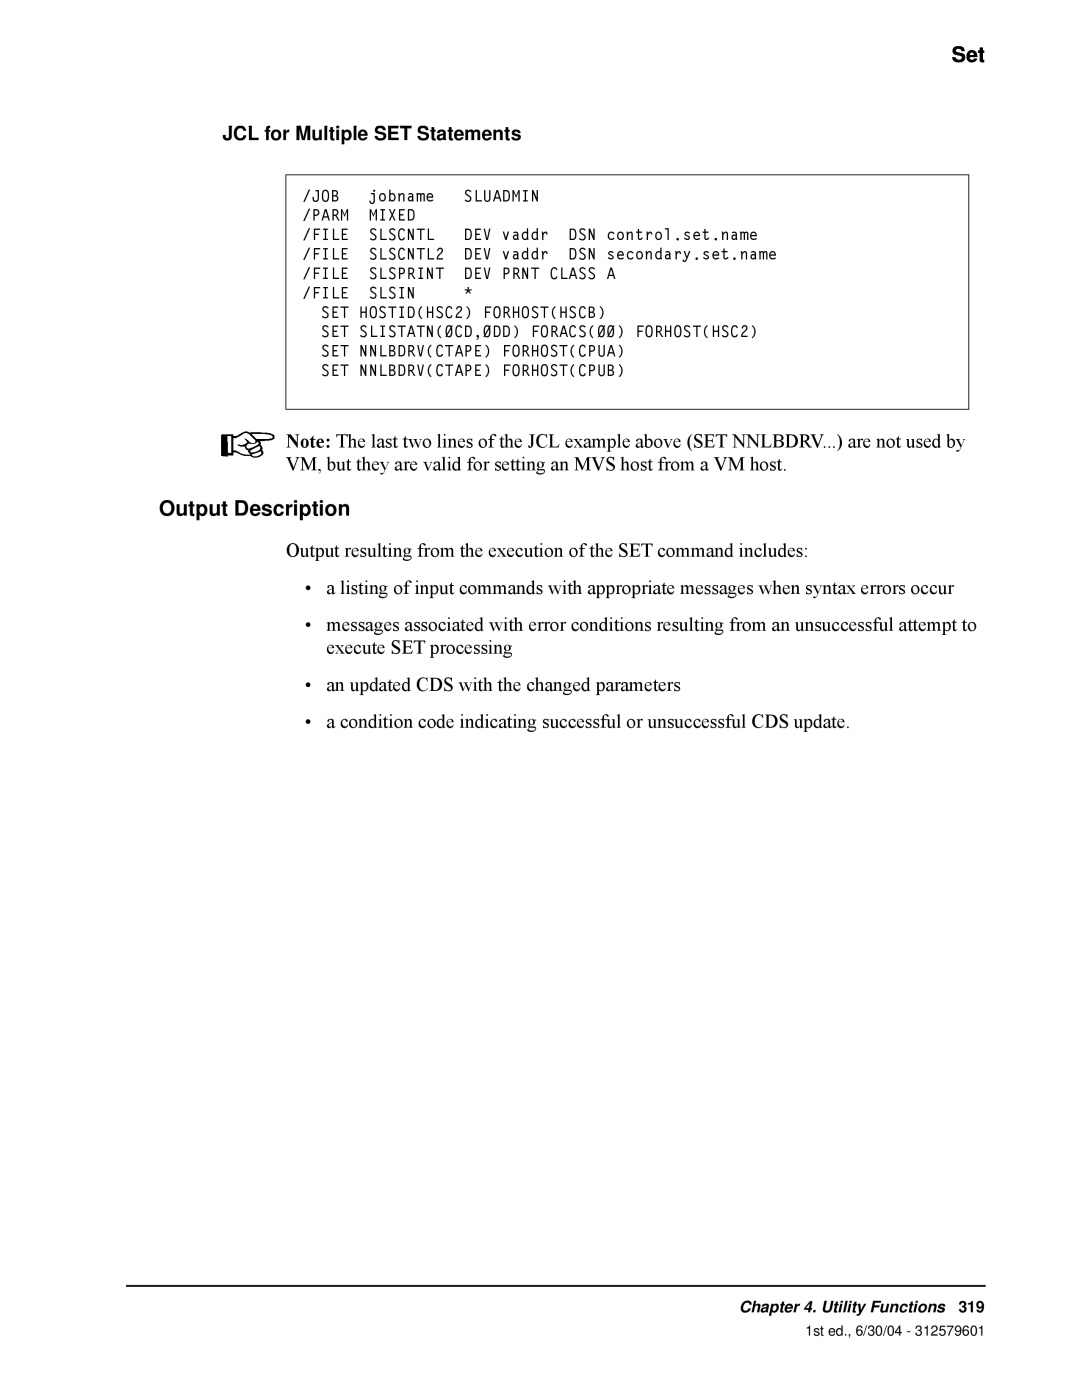 StorageTek 6 manual JCL for Multiple SET Statements, Output Description 